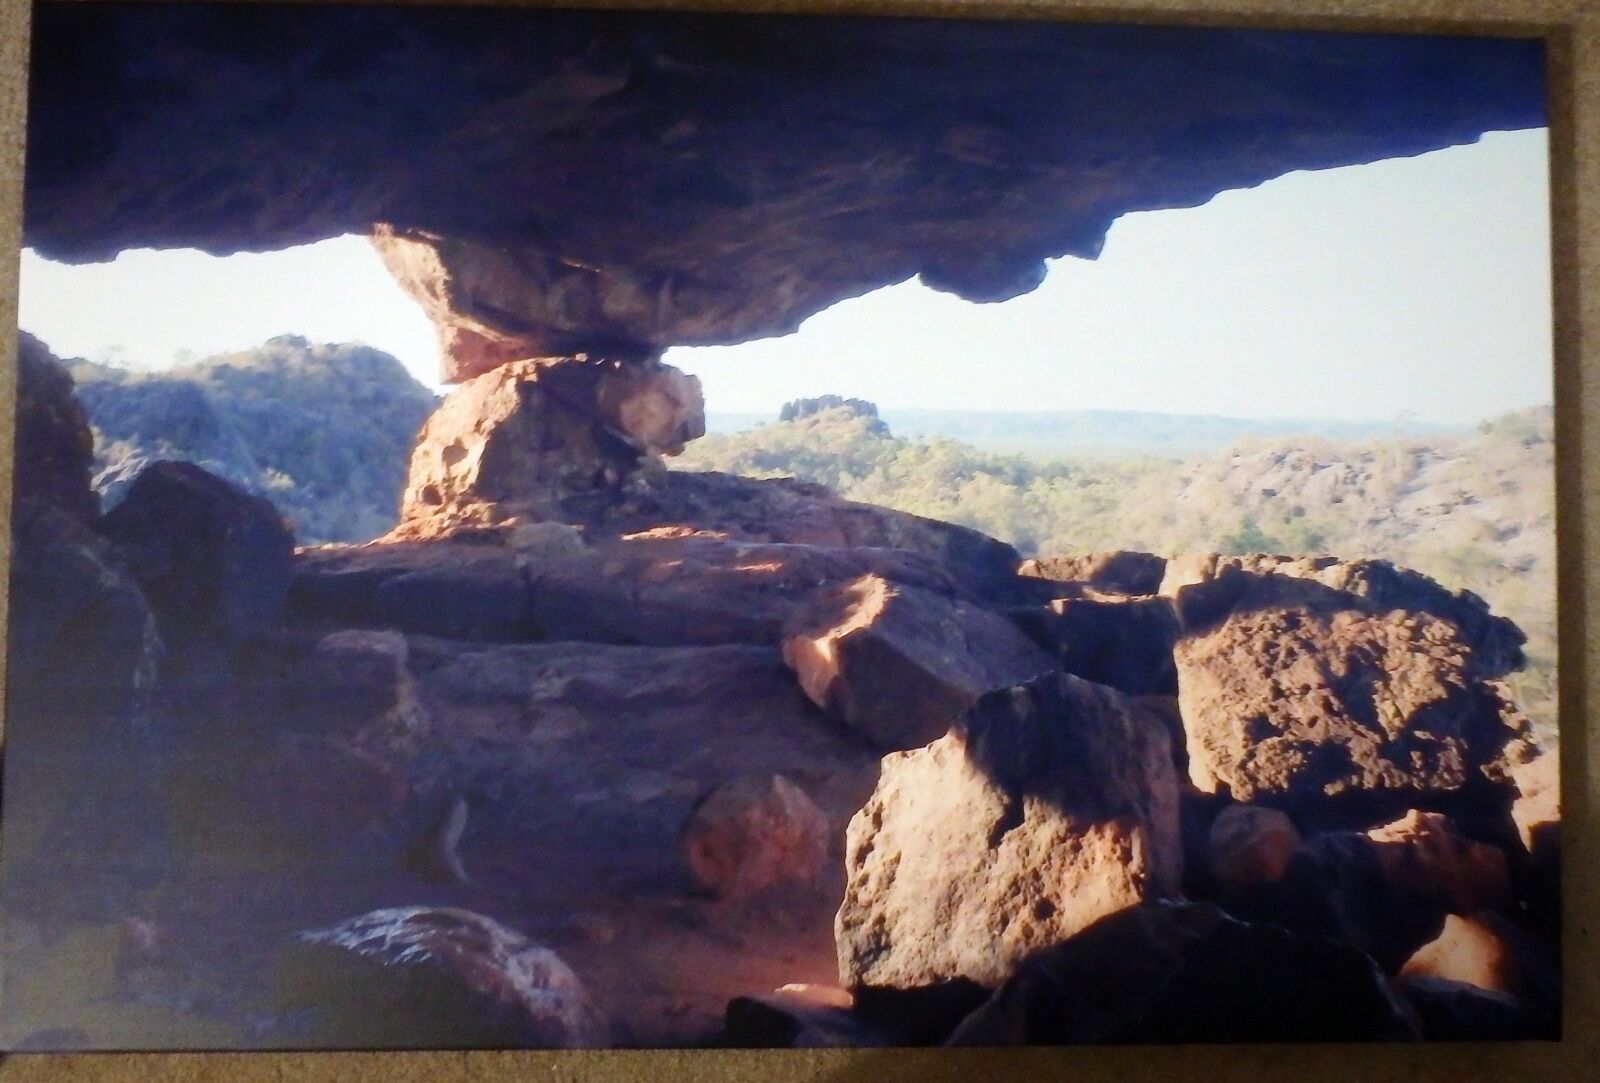 Olympus TG-835 sample photo. Cave, rocks, landscape photography